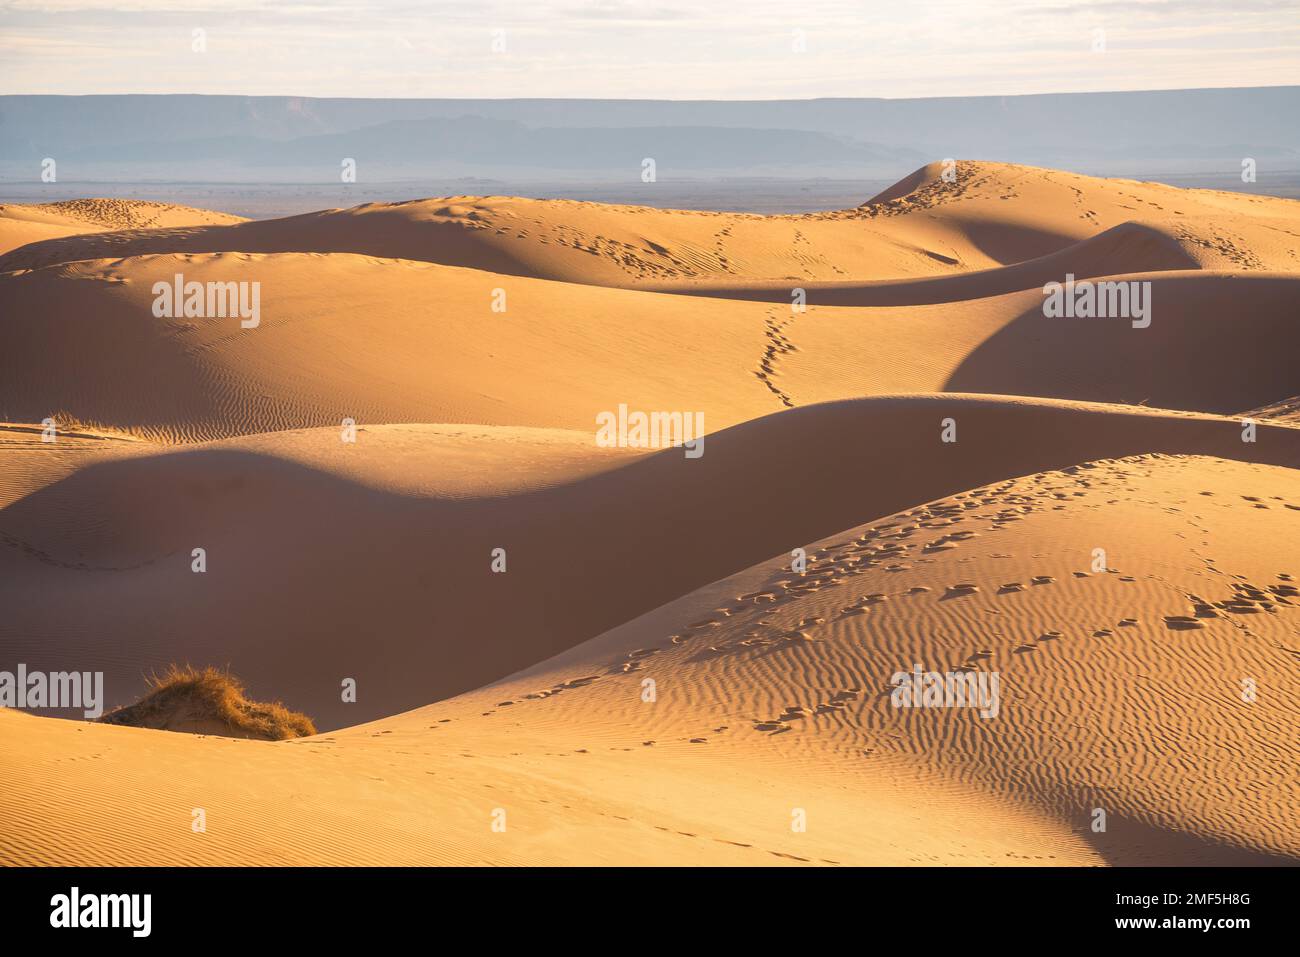 A view of desert dunes in the Sahara desert, Morocco Stock Photo